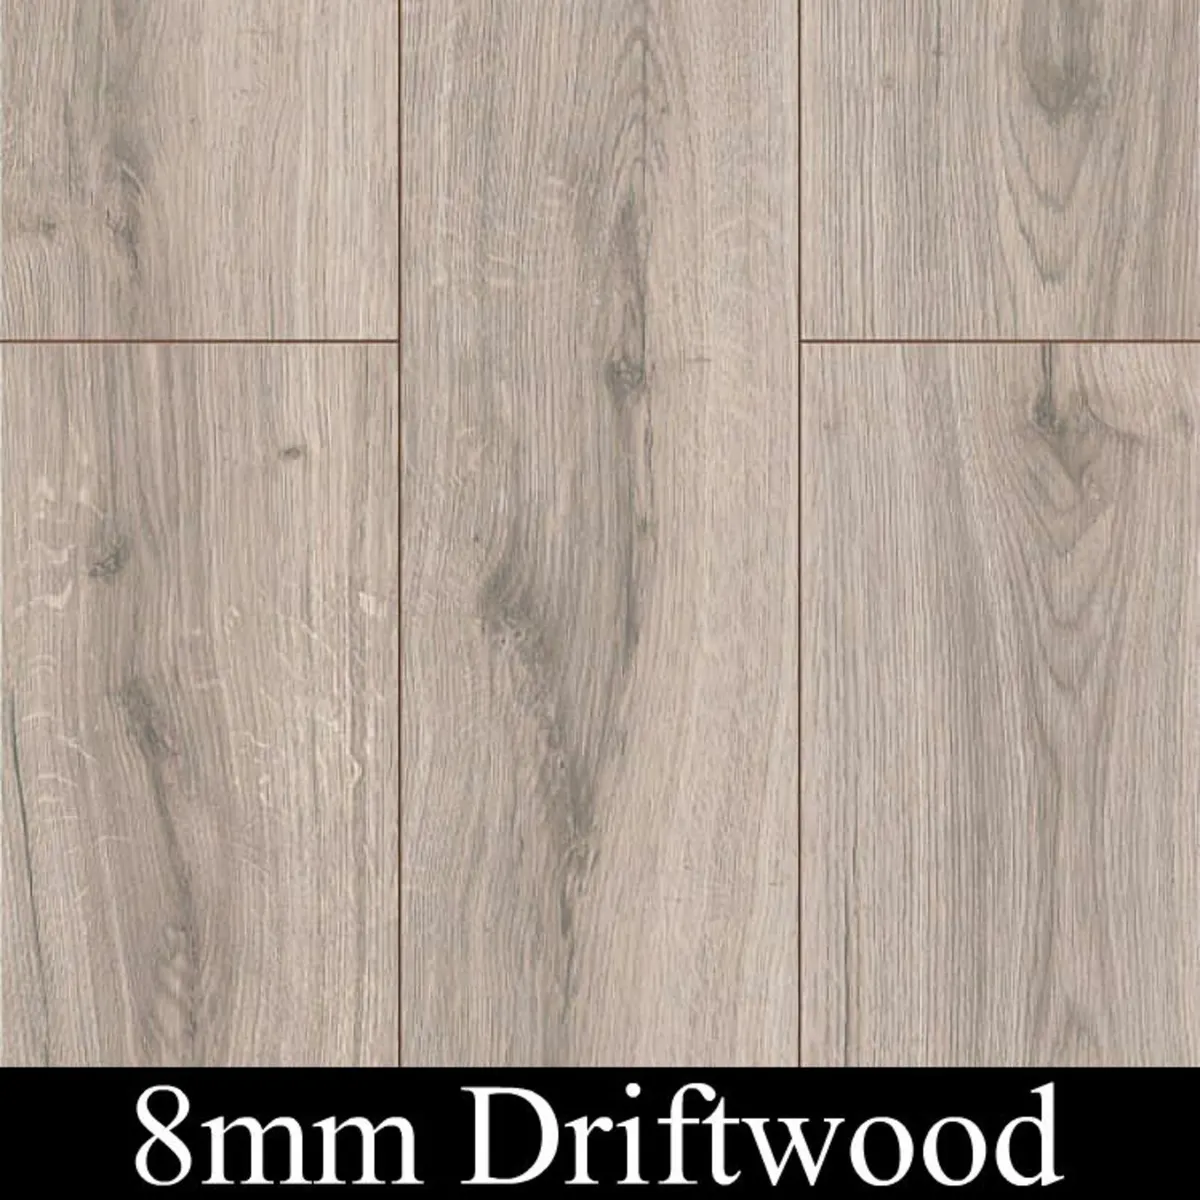 Driftwood click flooring